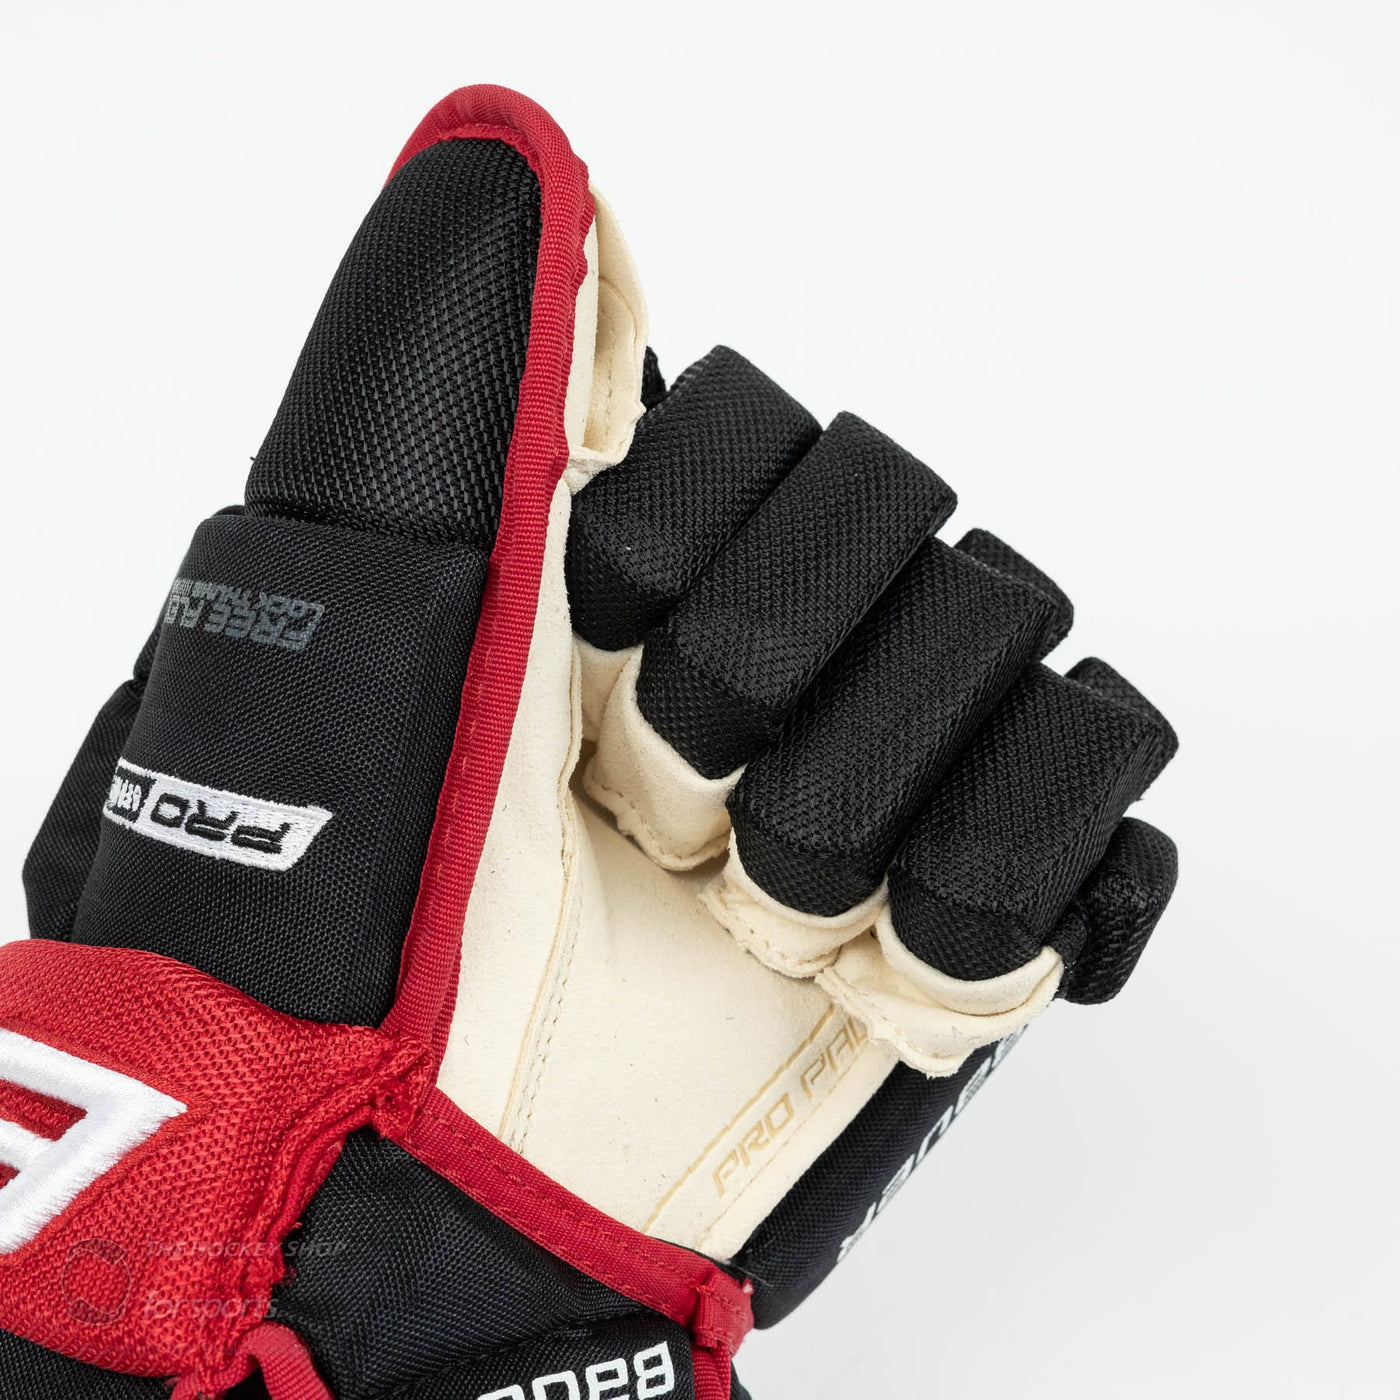 Bauer Pro Series Intermediate Hockey Gloves